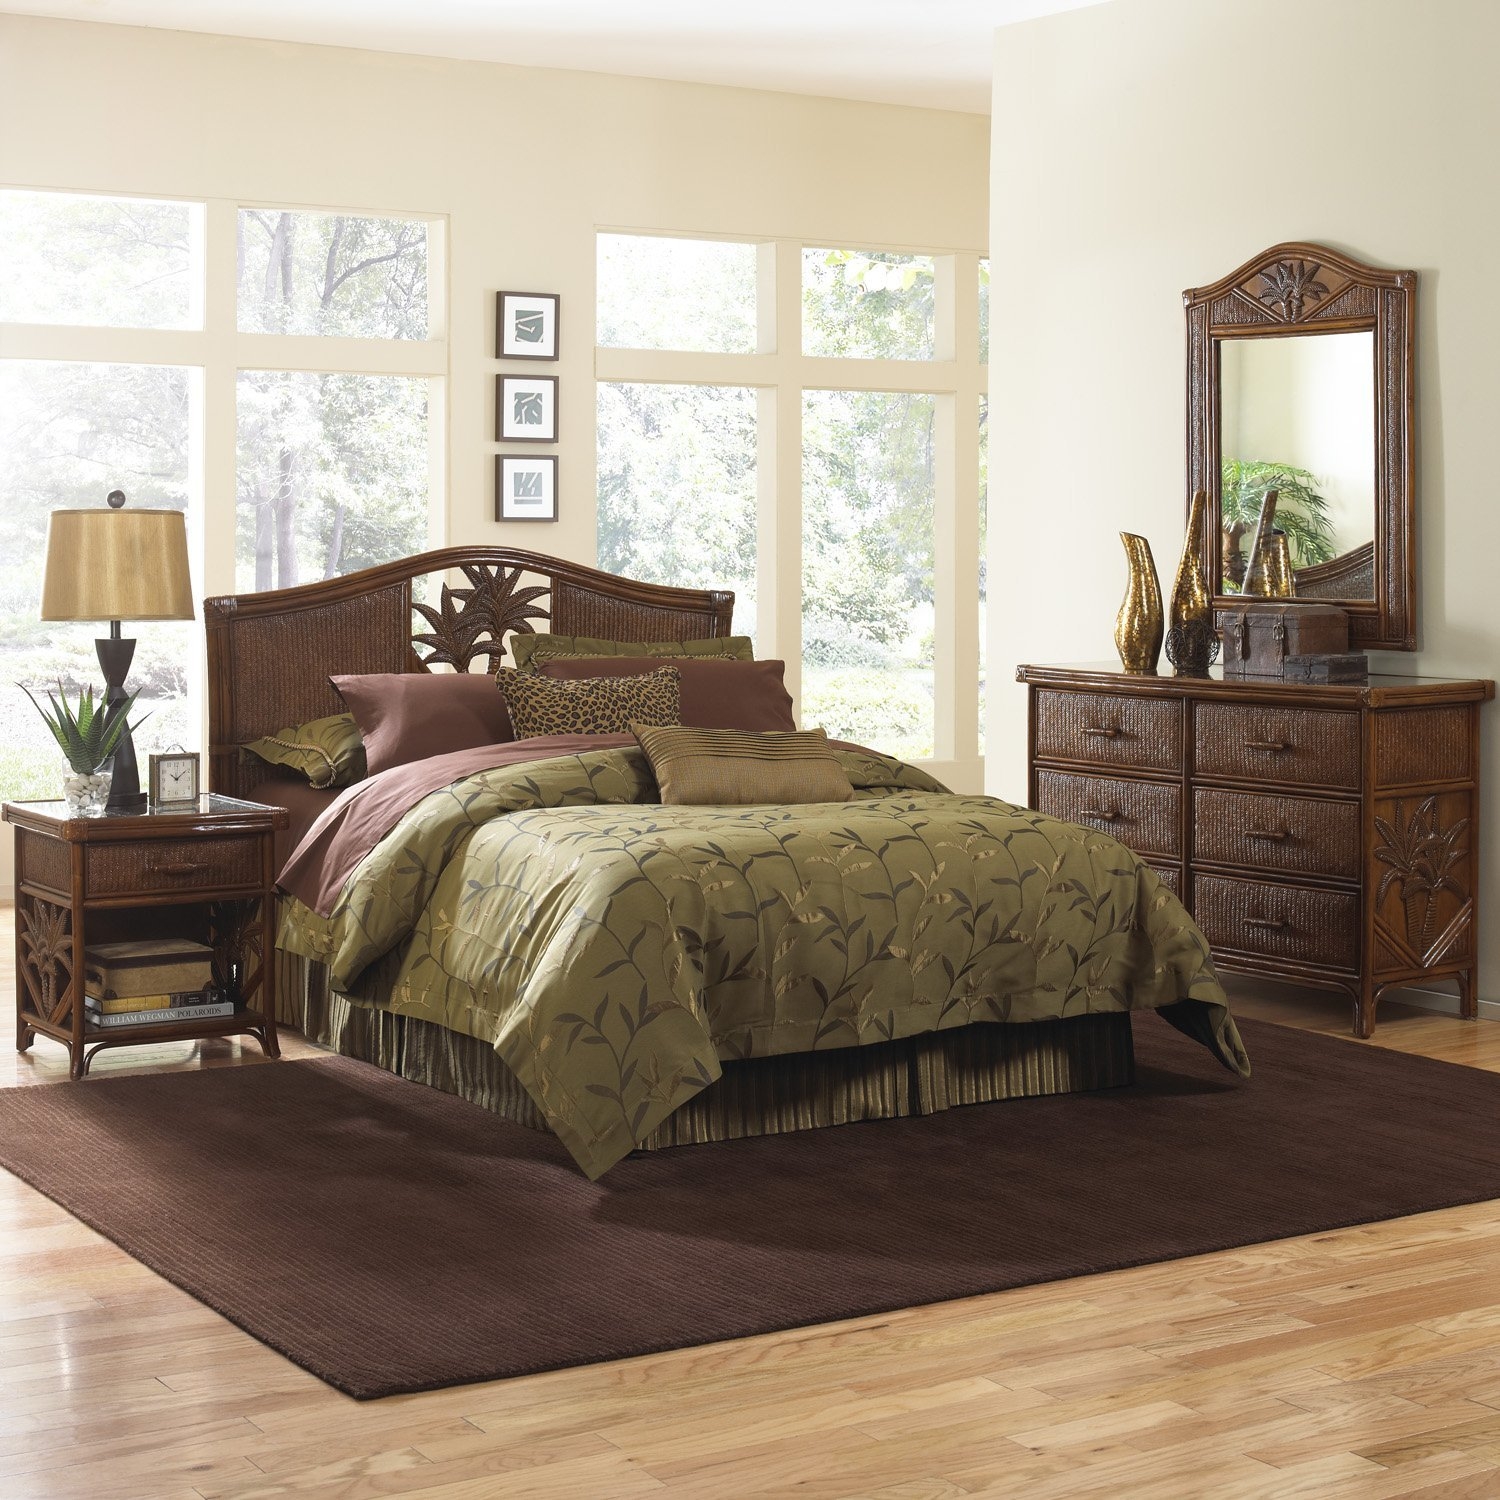 Rattan bedroom furniture